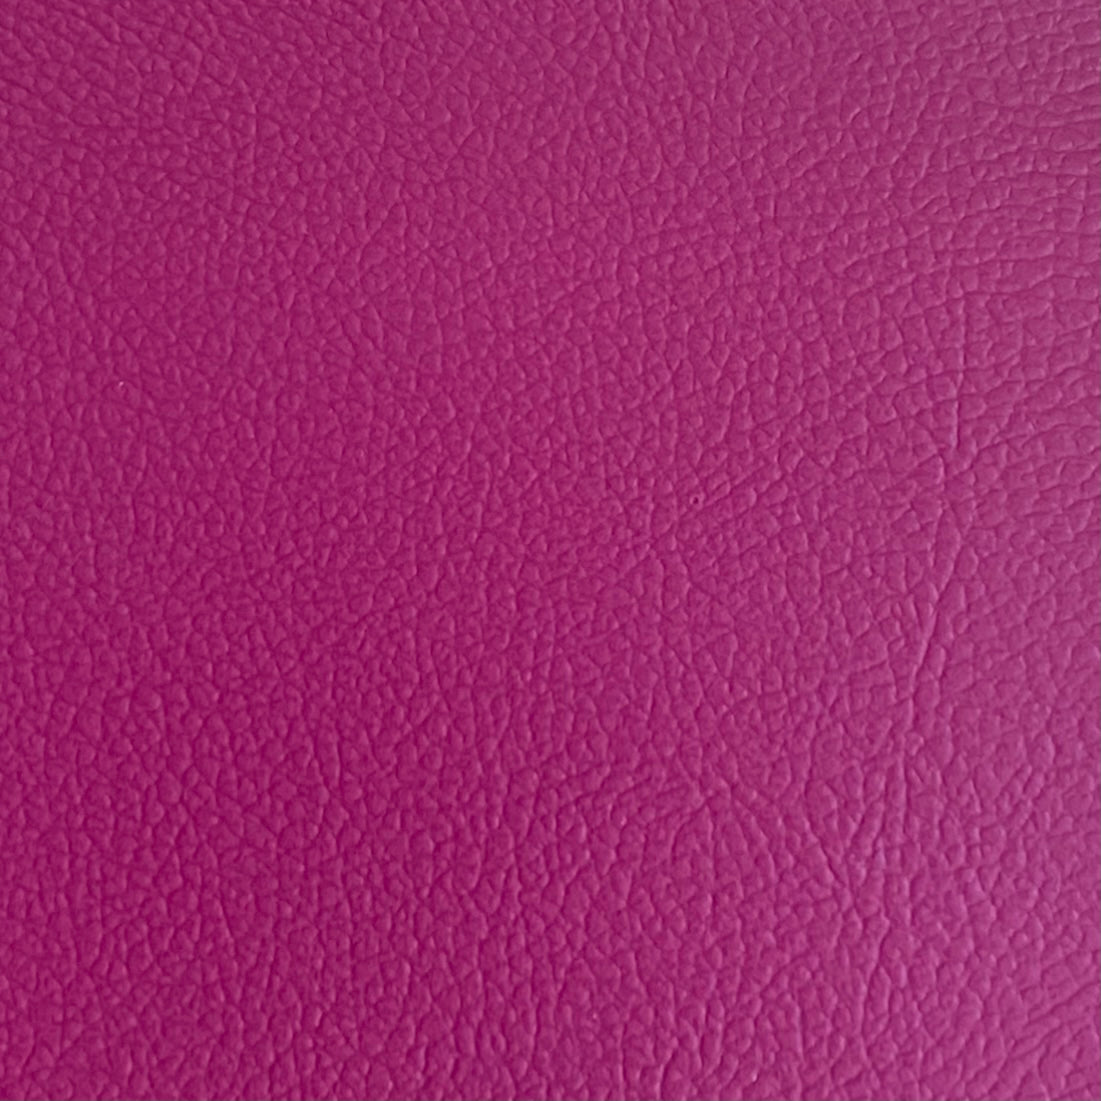 Upholstery Vinyl Fuchsia Pink 039